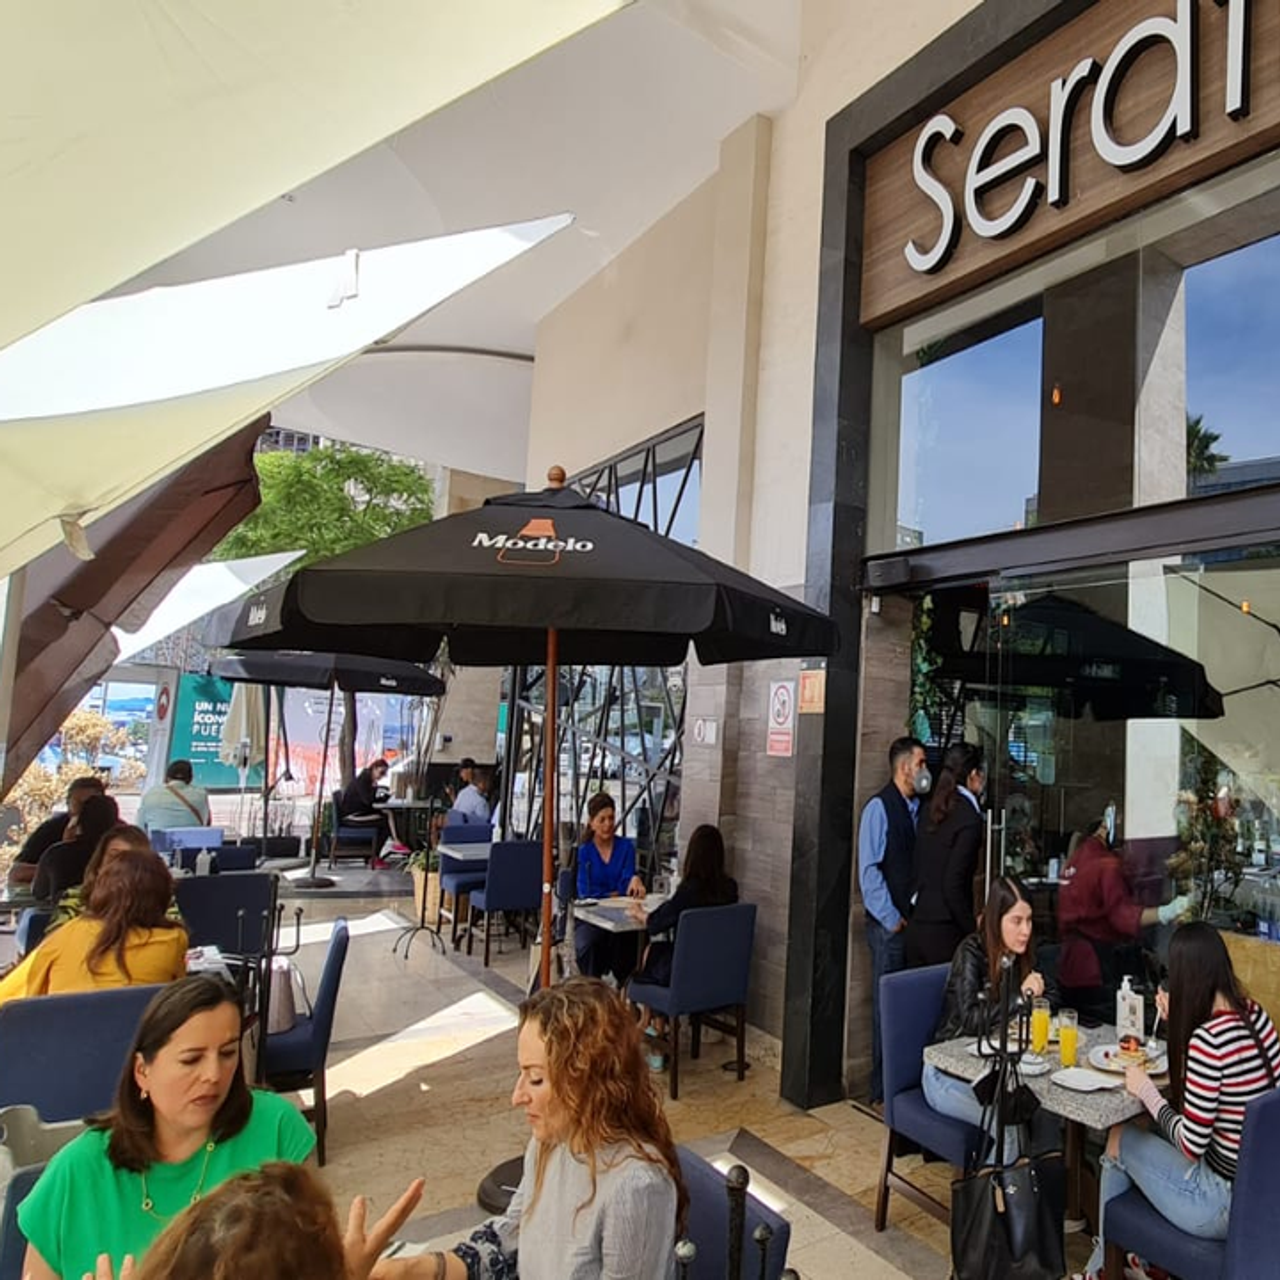 Seratta - Lomas Restaurant - Tlaxcalcingo, PUE | OpenTable